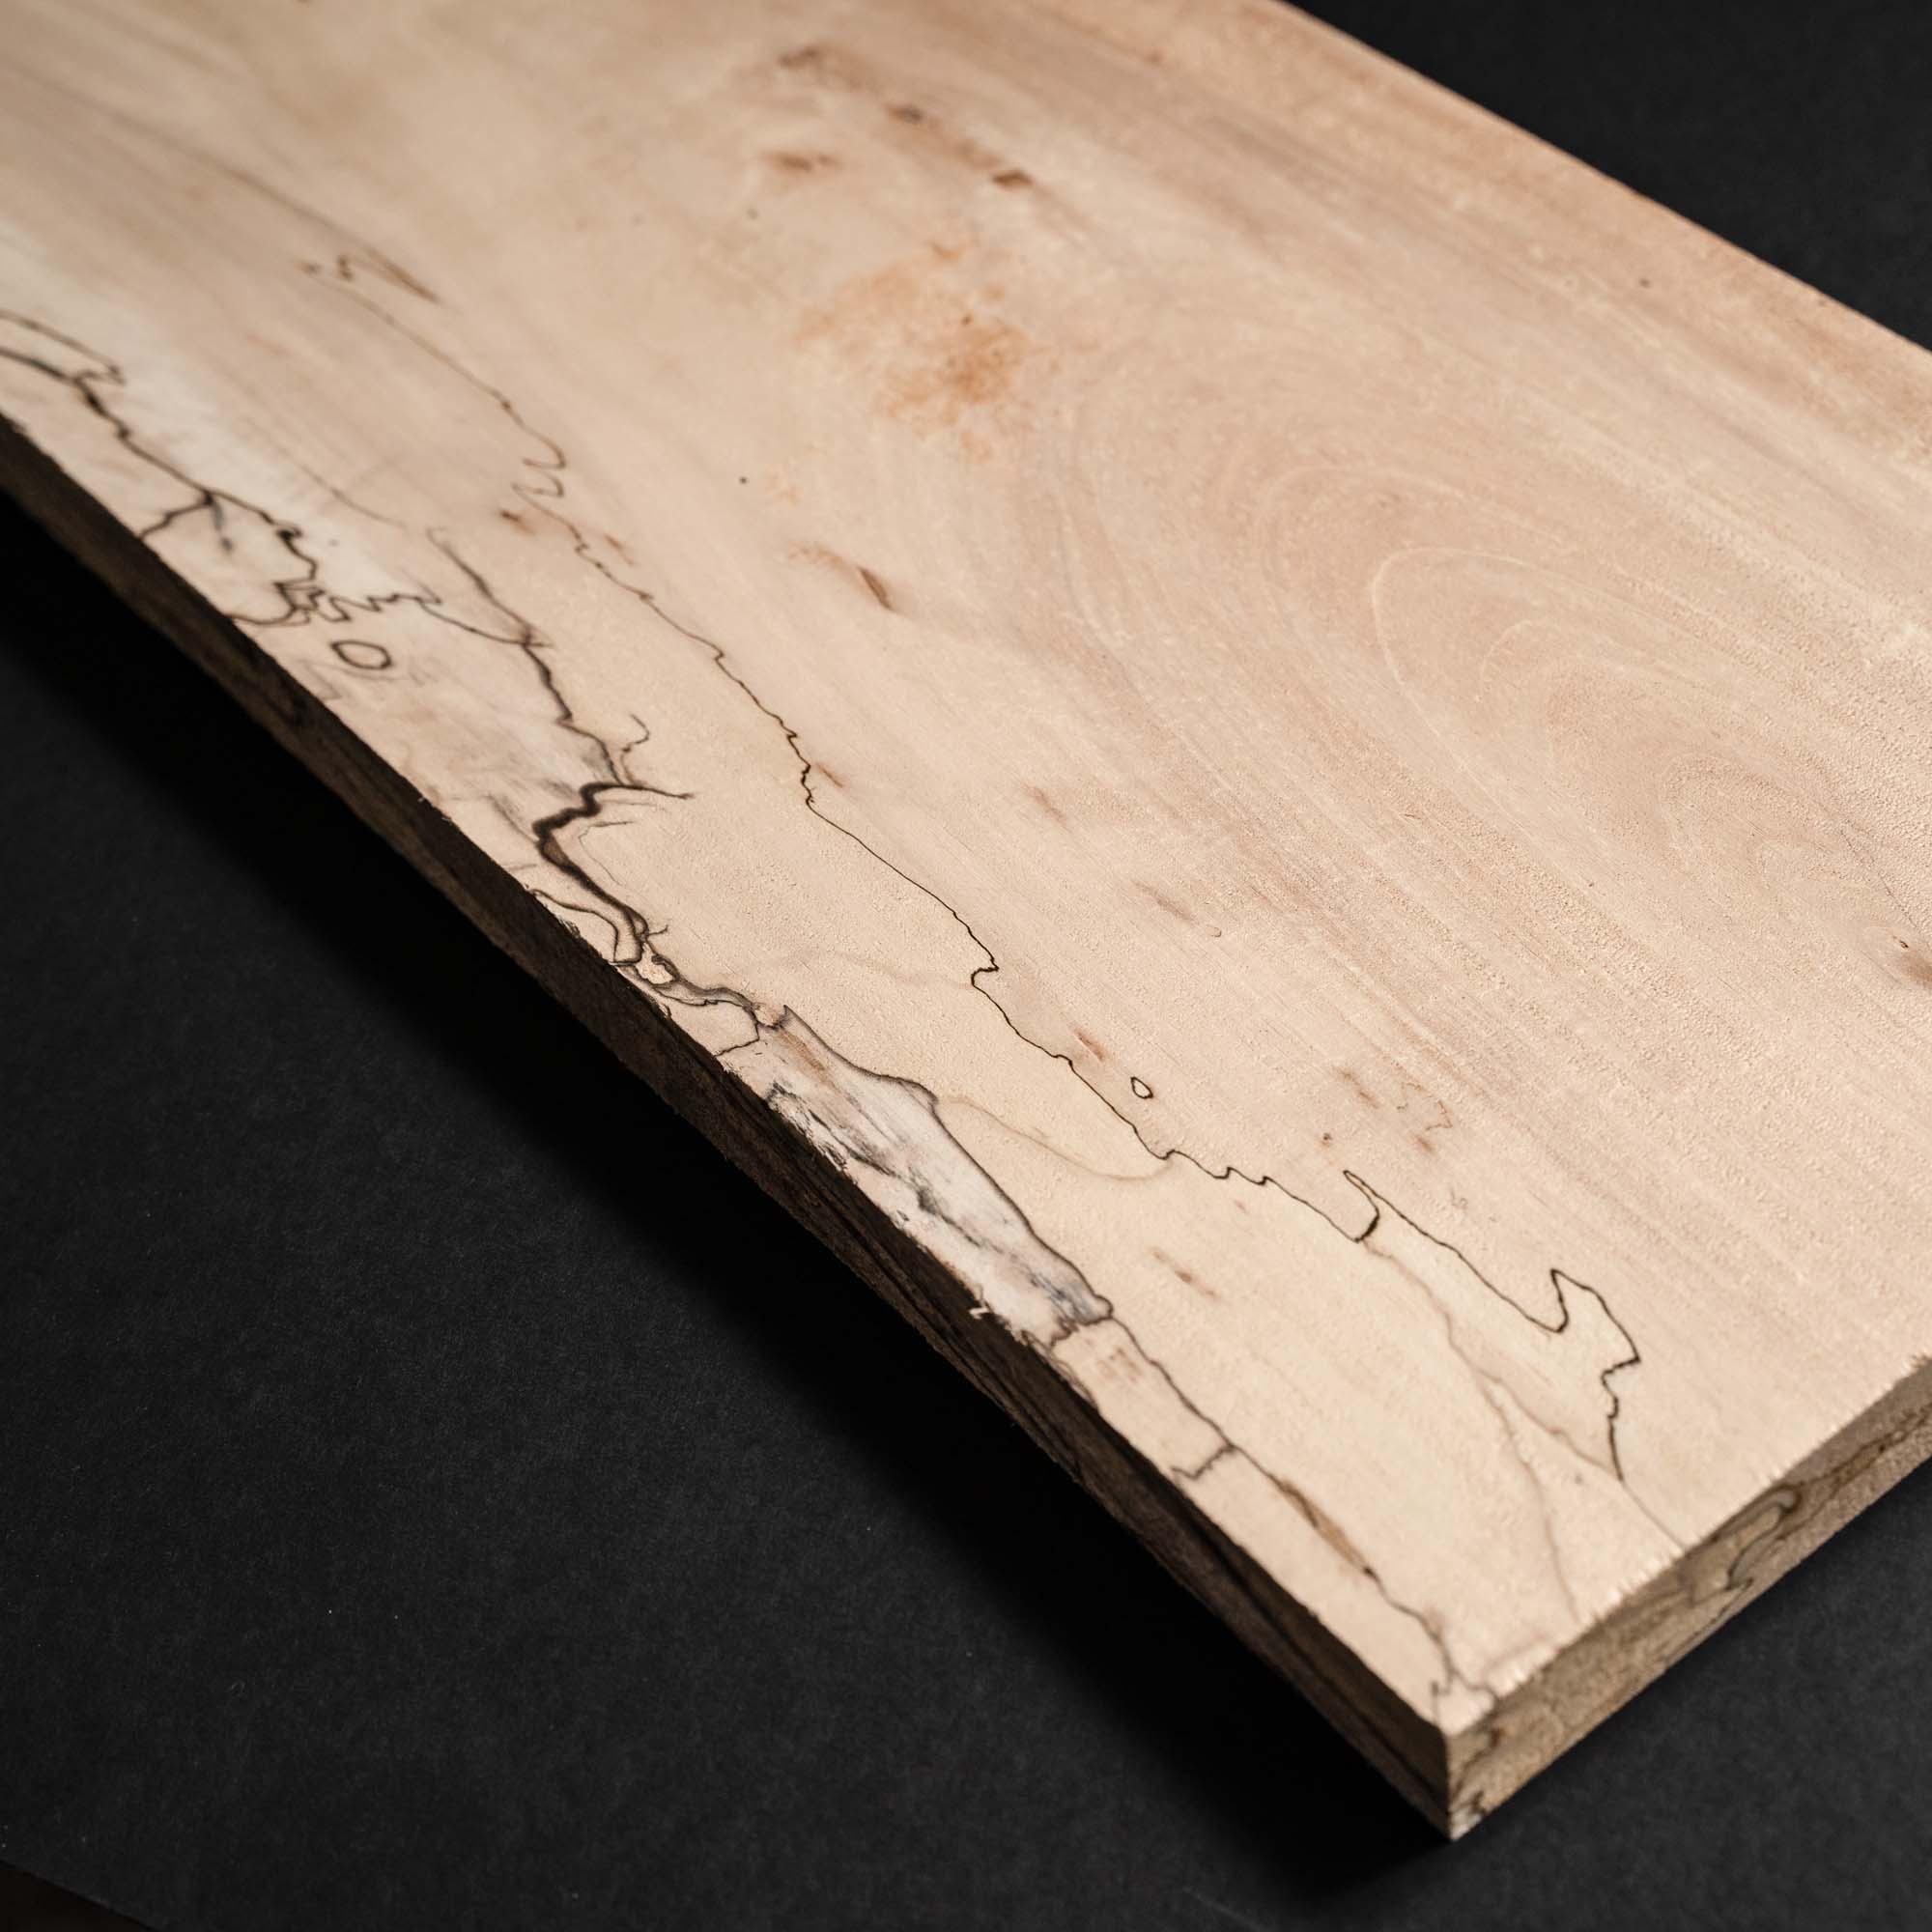 4/4 1” Spalted Wide Hard Maple Wood Boards - Kiln Dried